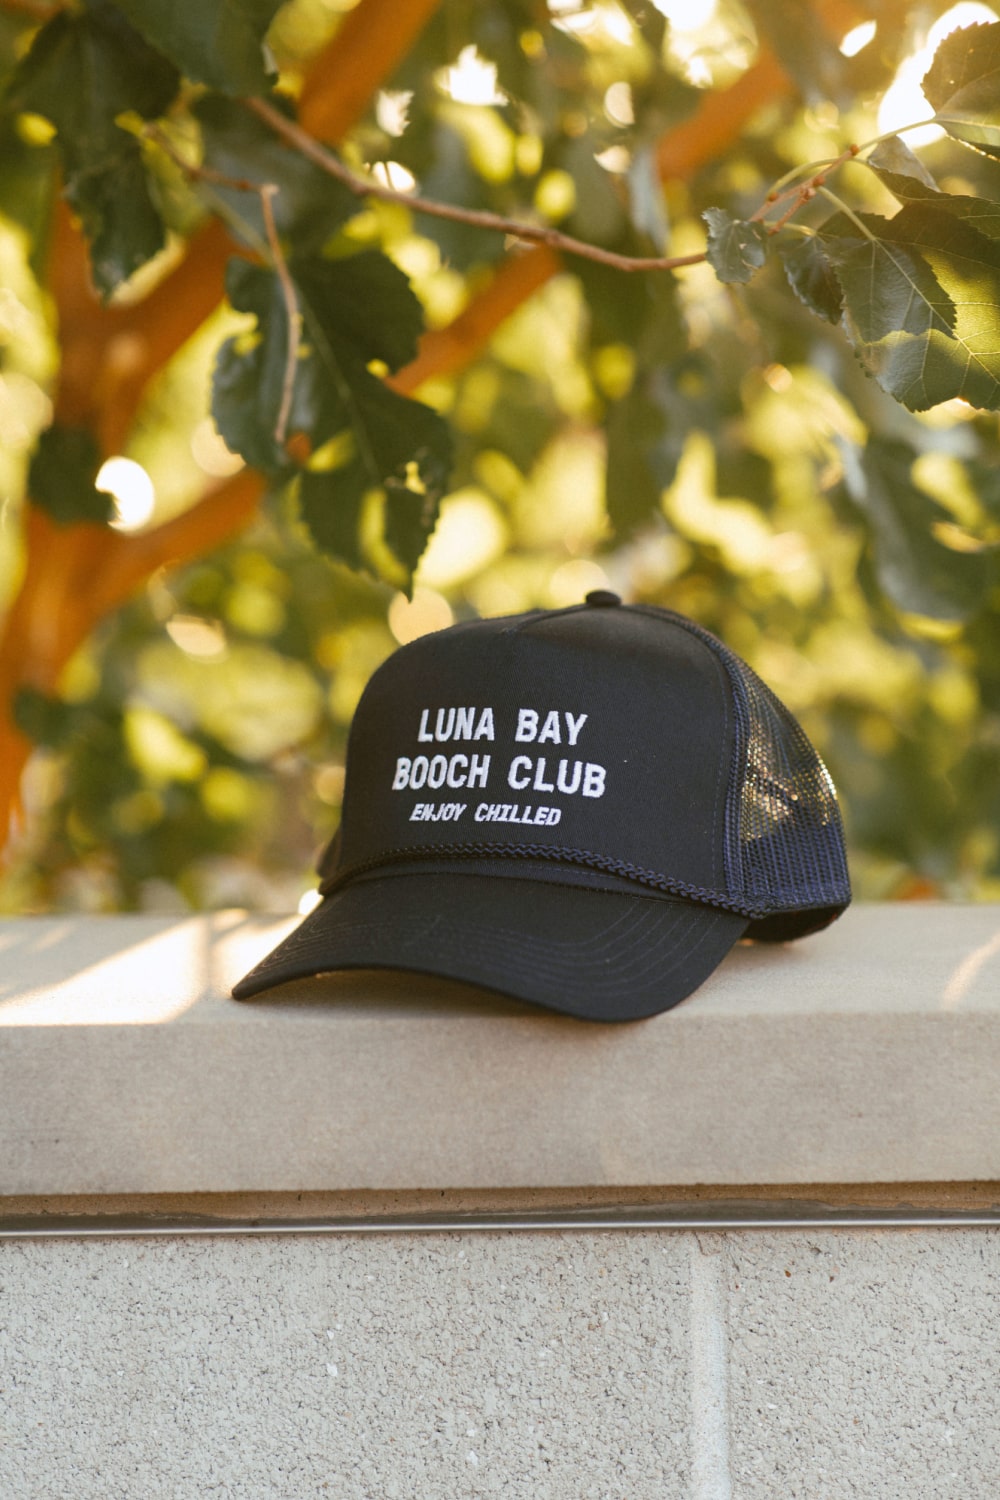 luna-bay-booch-club-trucker-hat-2-min.jpg